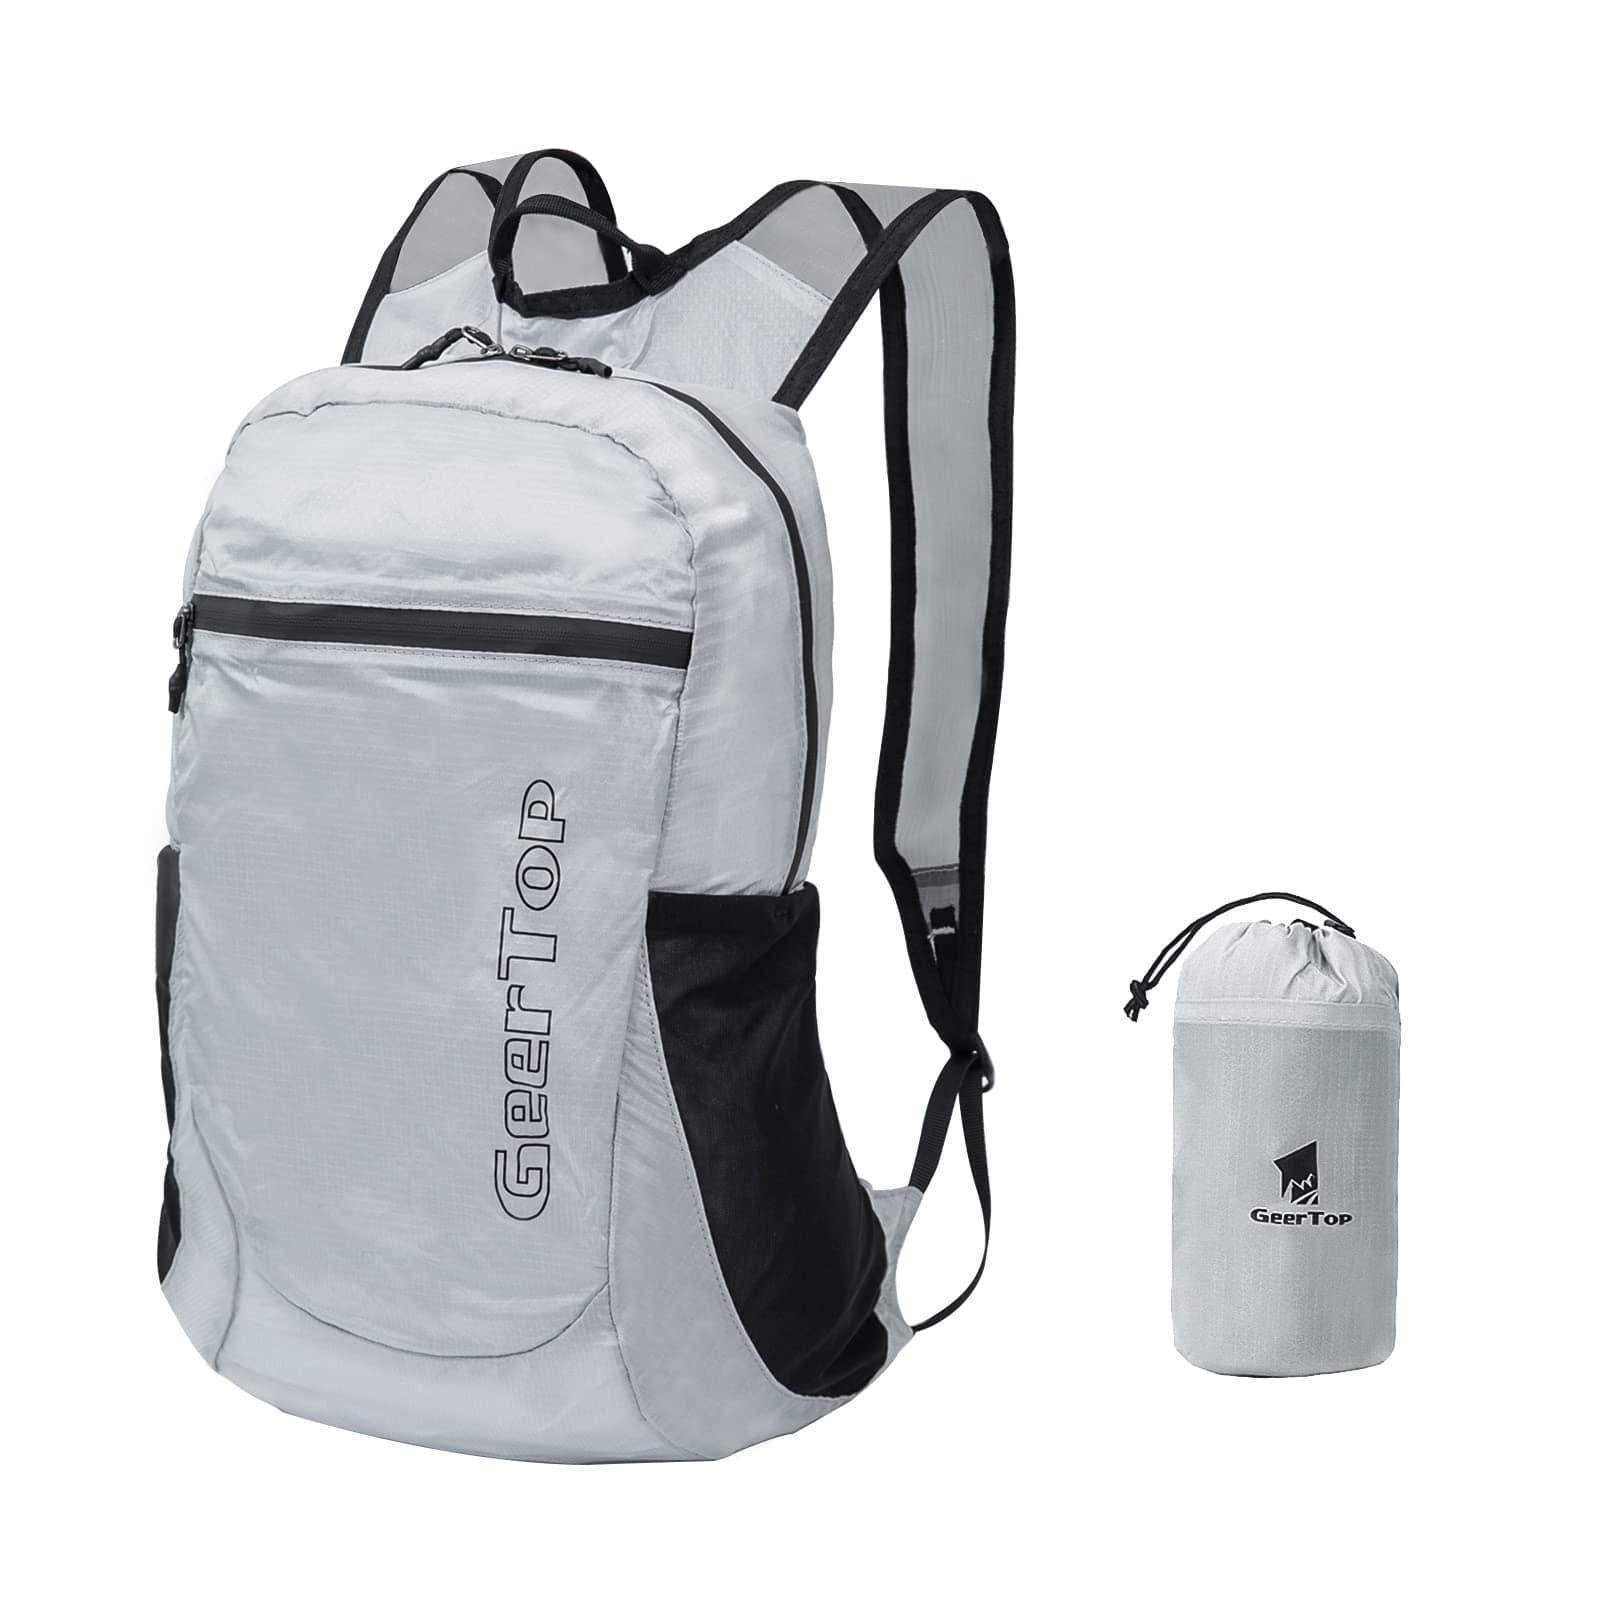 GeerTop Outdoor Store Ultralight Packable Backpack for Outdoors